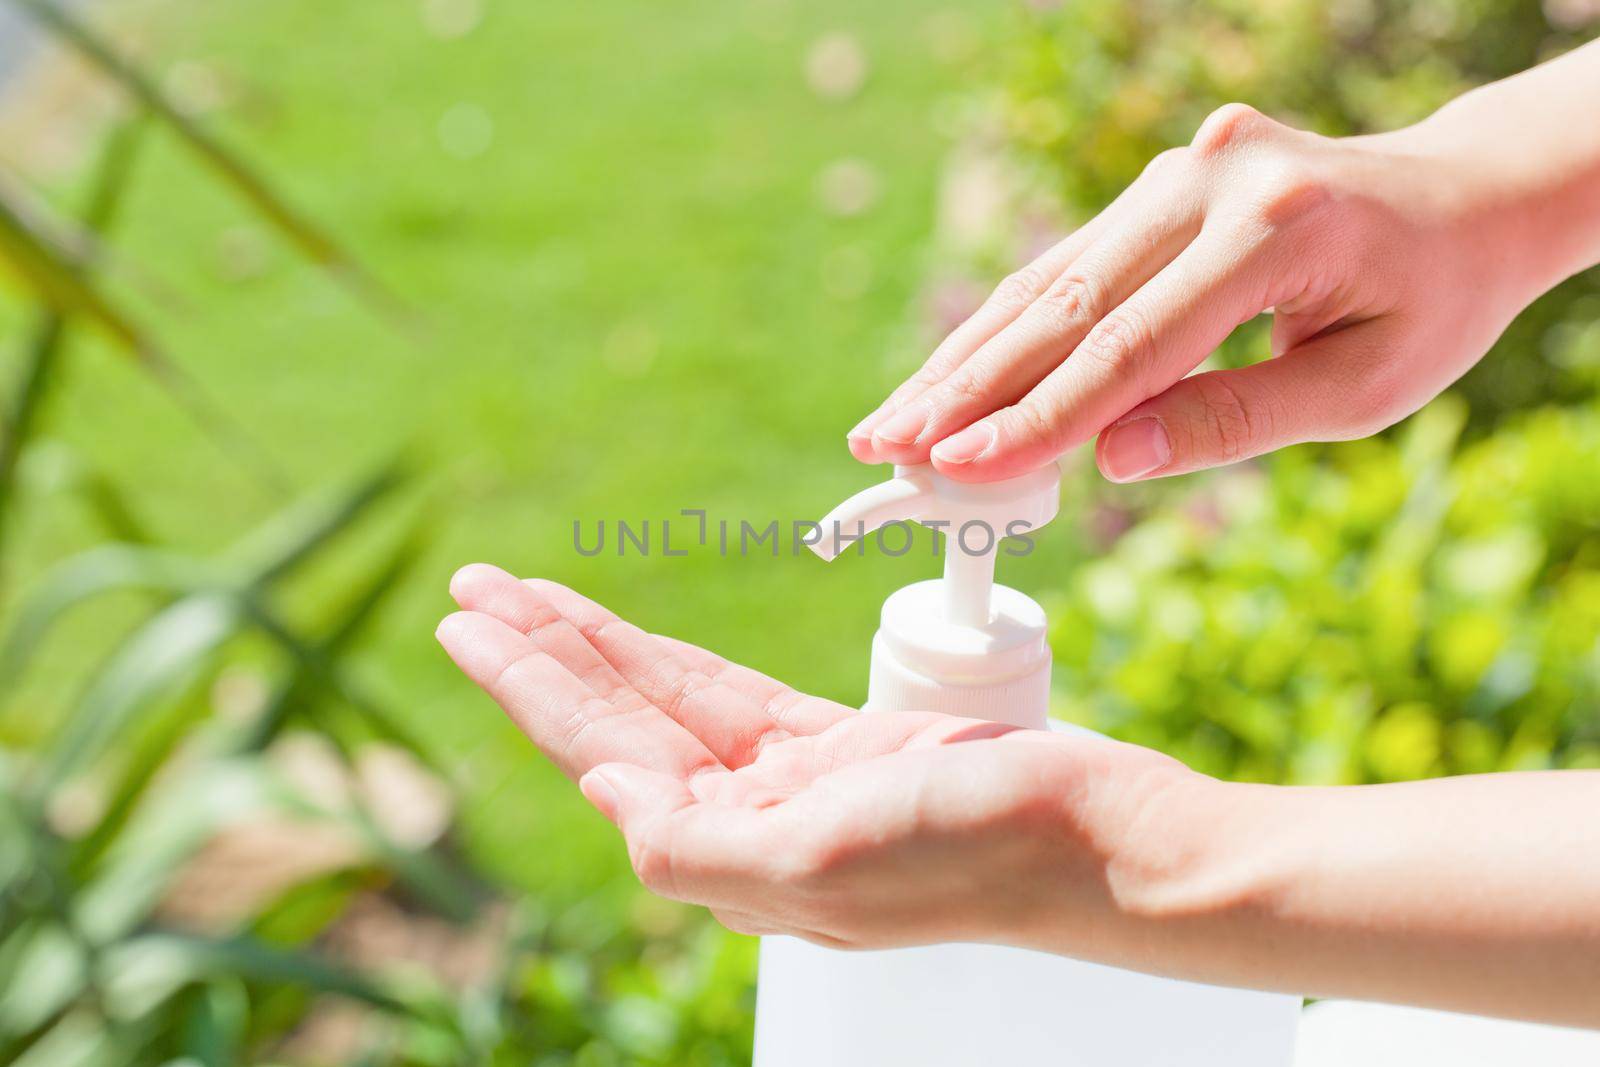 Female hands using wash hand sanitizer gel pump dispenser. by jayzynism